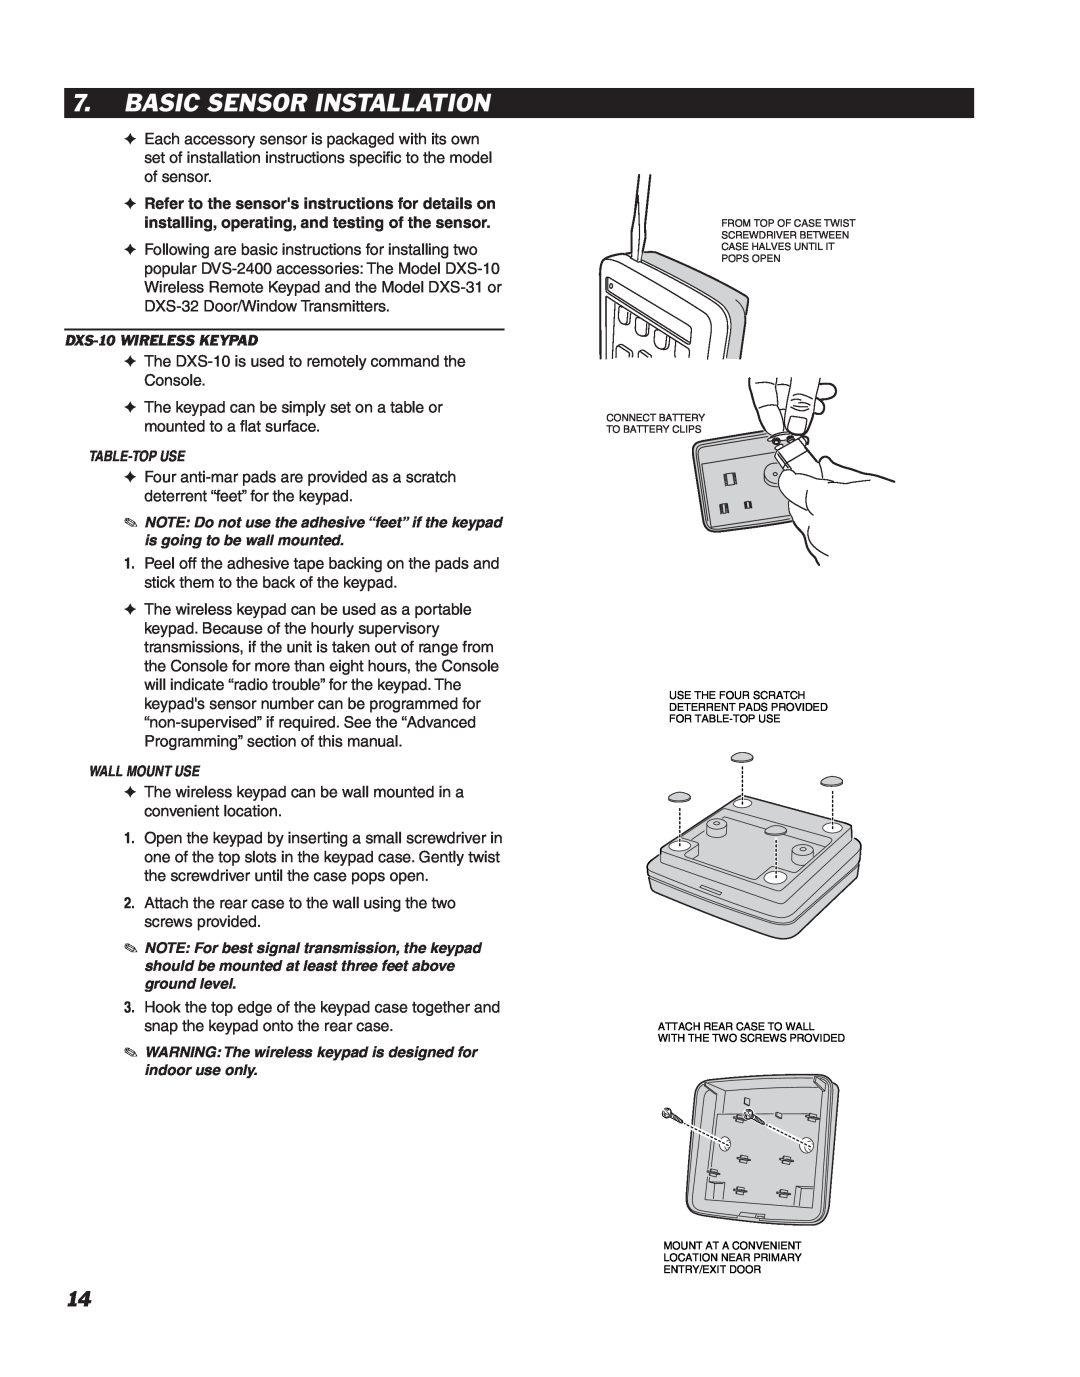 Linear DVS-2400 manual Basic Sensor Installation, DXS-10WIRELESS KEYPAD 